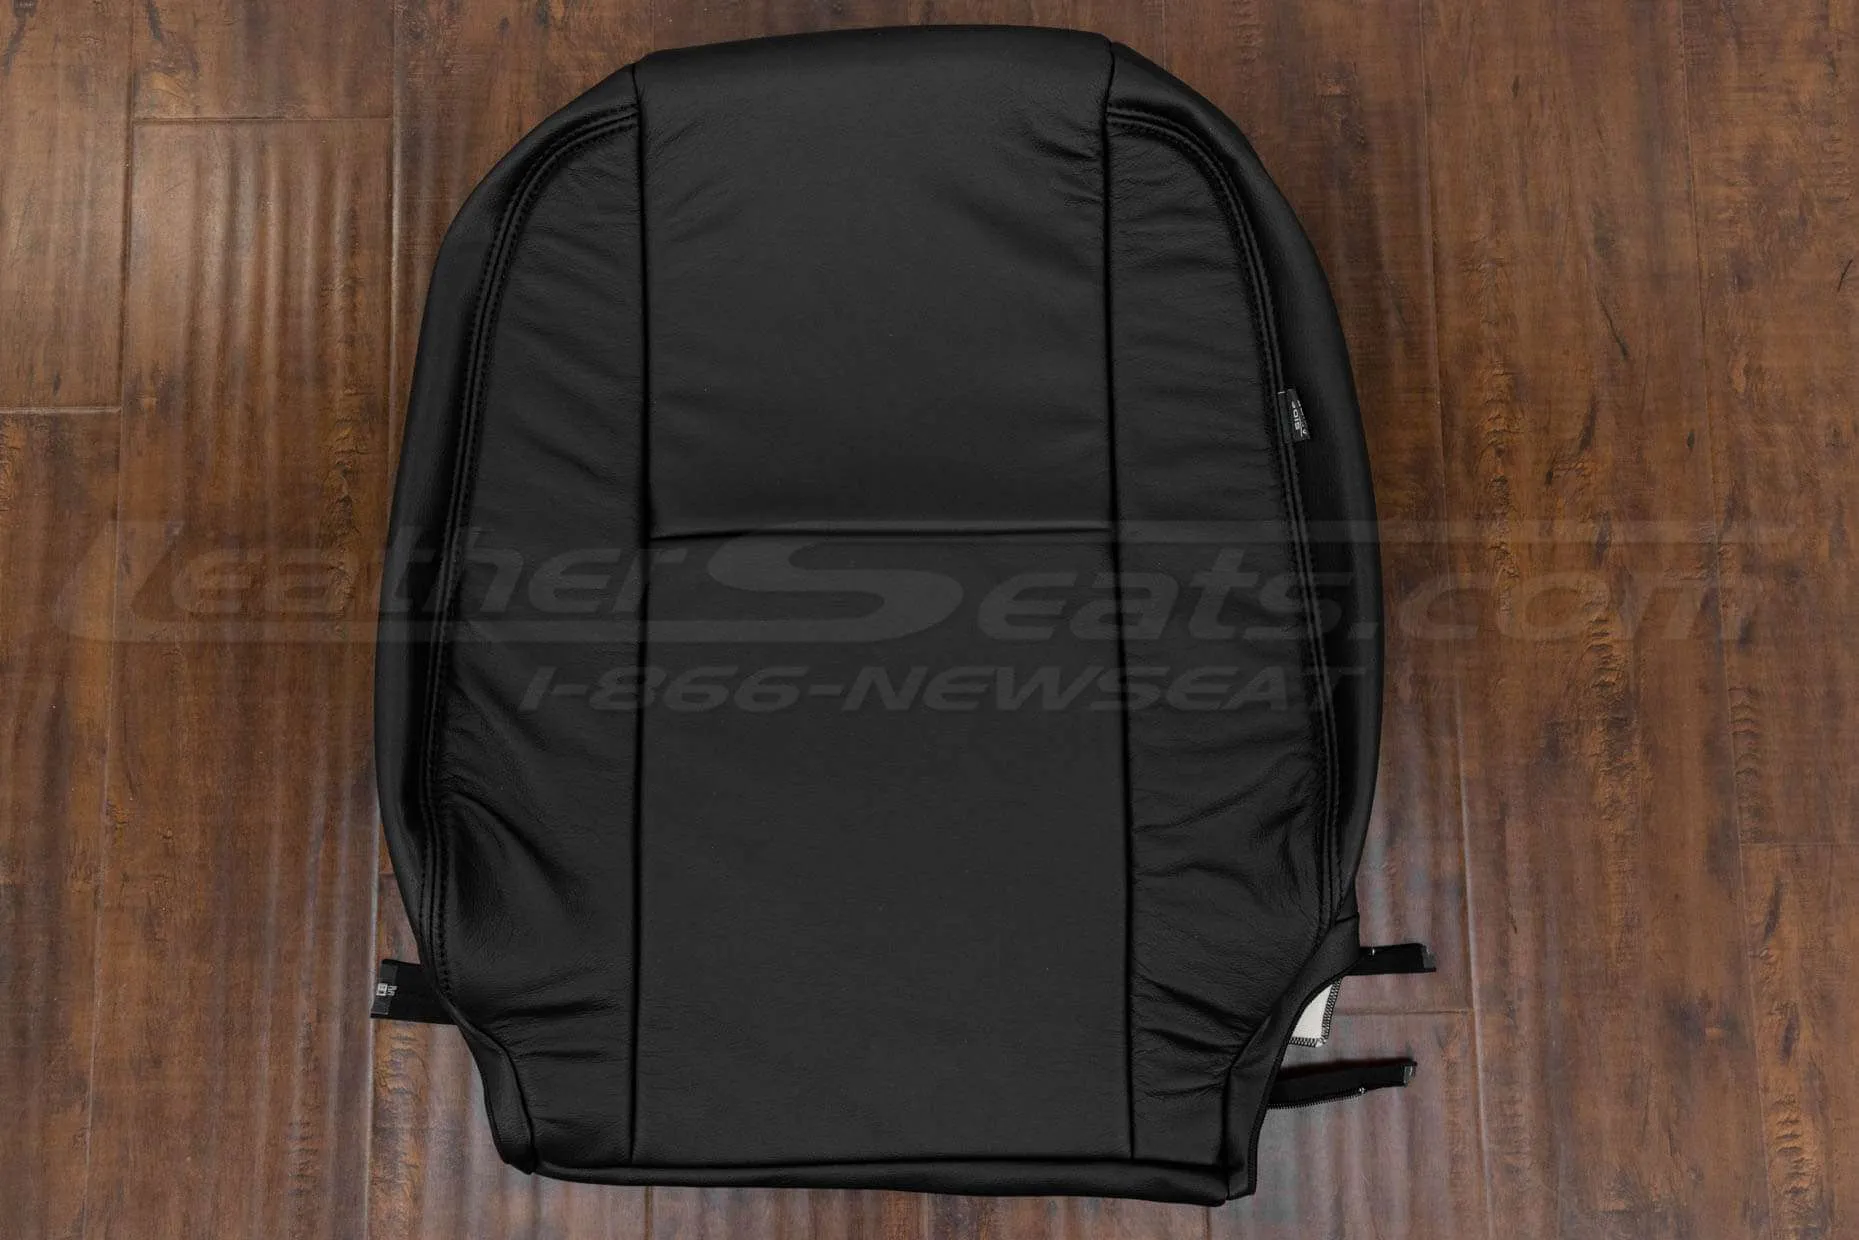 Toyota FJ Cruiser Leather Seat Kit - Black - Front backrest upholstery